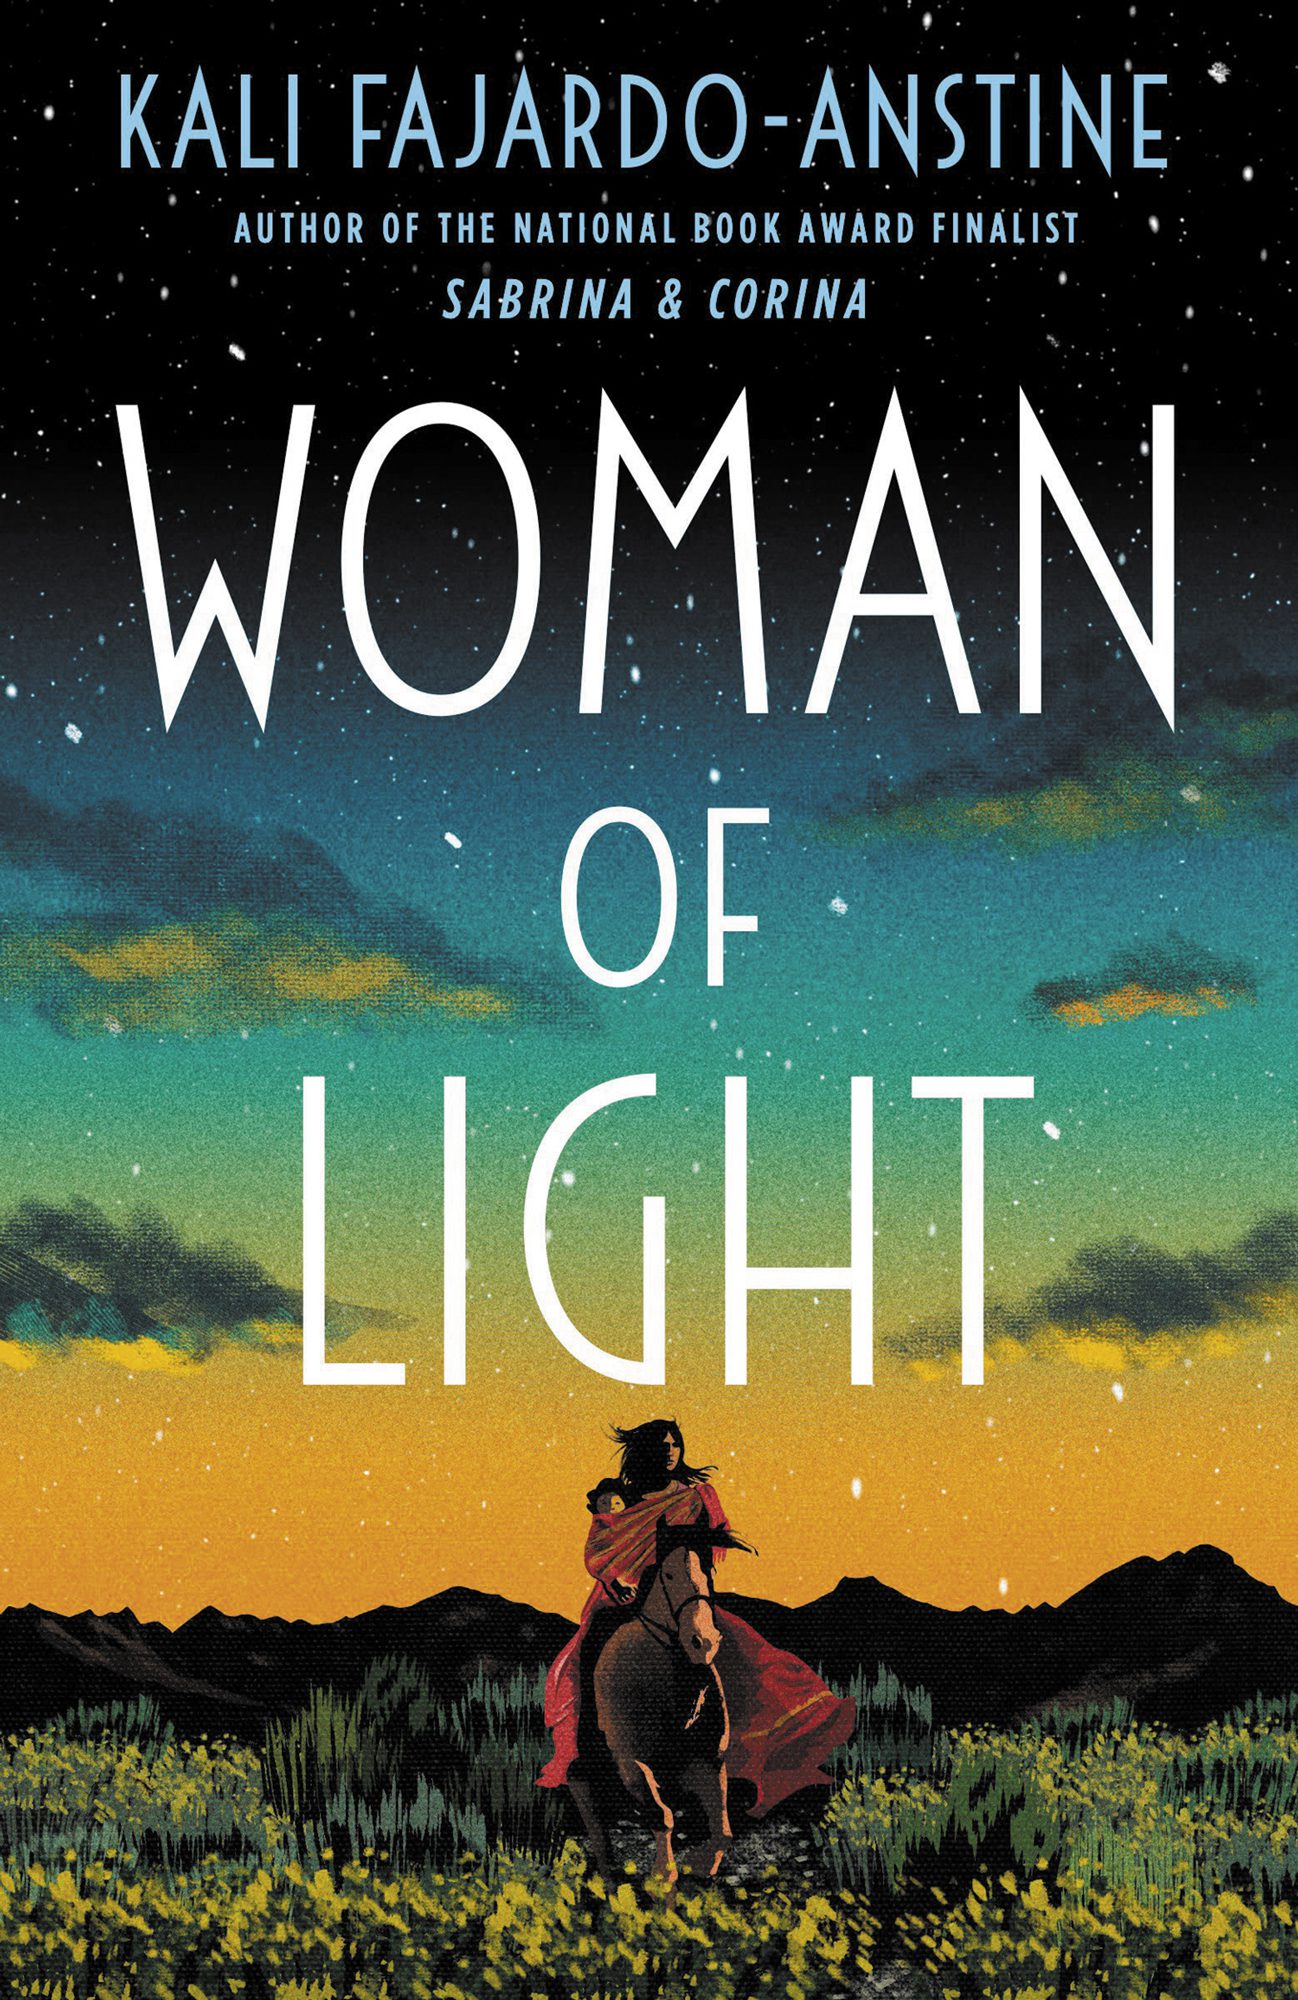 Woman-of-Light-by-Kali-Farjardo-Anstine-(2022)_Book Club August 2022 by Hana Zittel